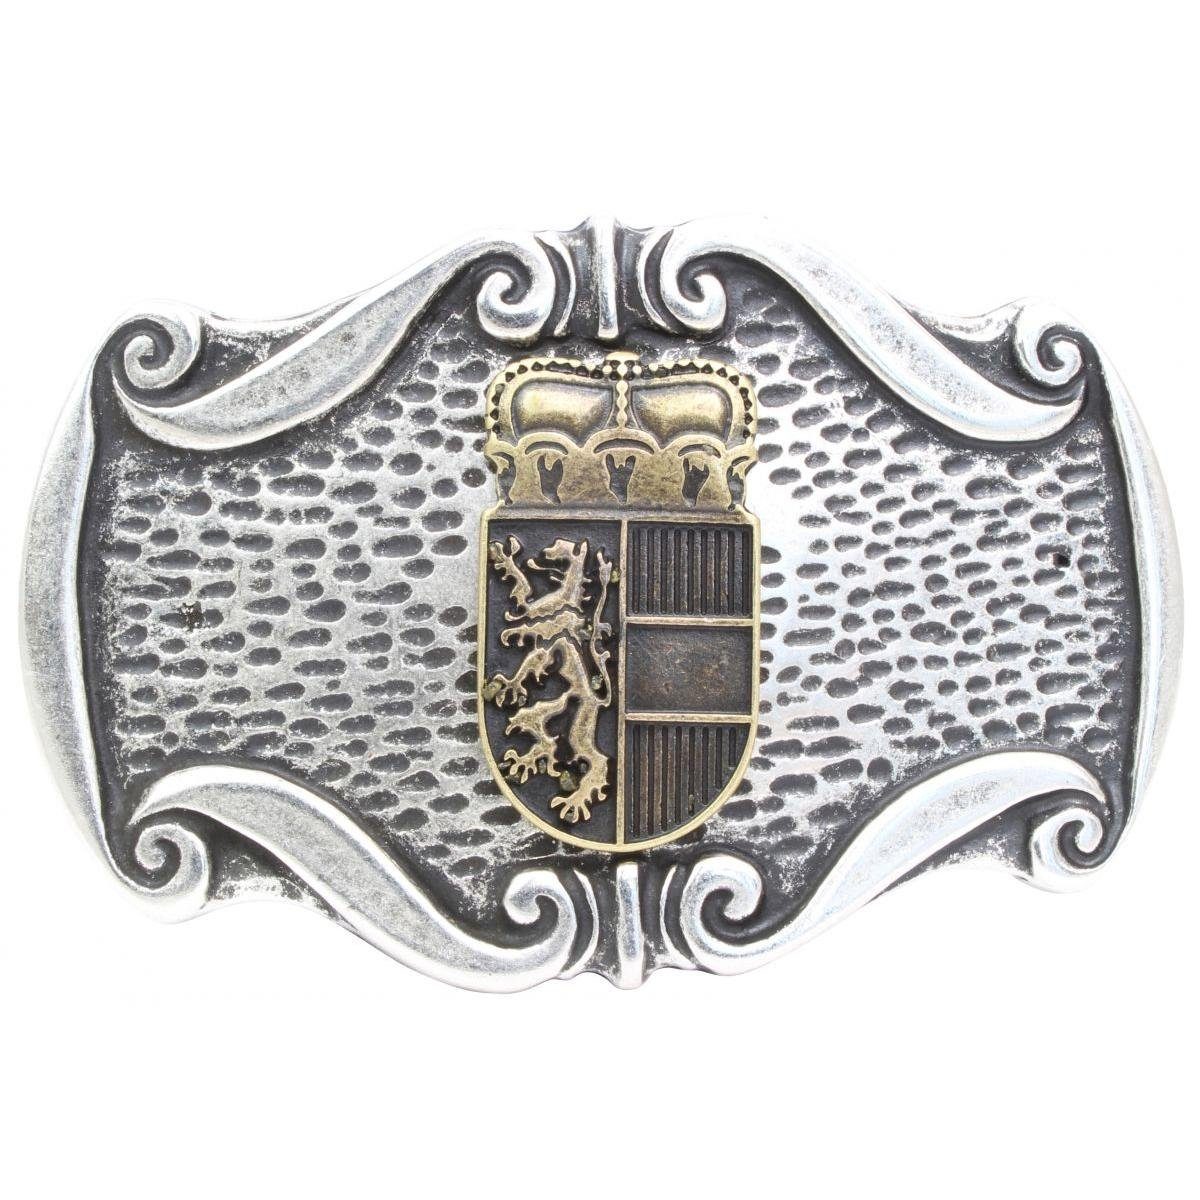 BELTINGER Gürtelschnalle Wappen Salzburg 4,0 cm - Buckle Wechselschließe Gürtelschließe 40mm - bicolor s/g | Gürtelschnallen